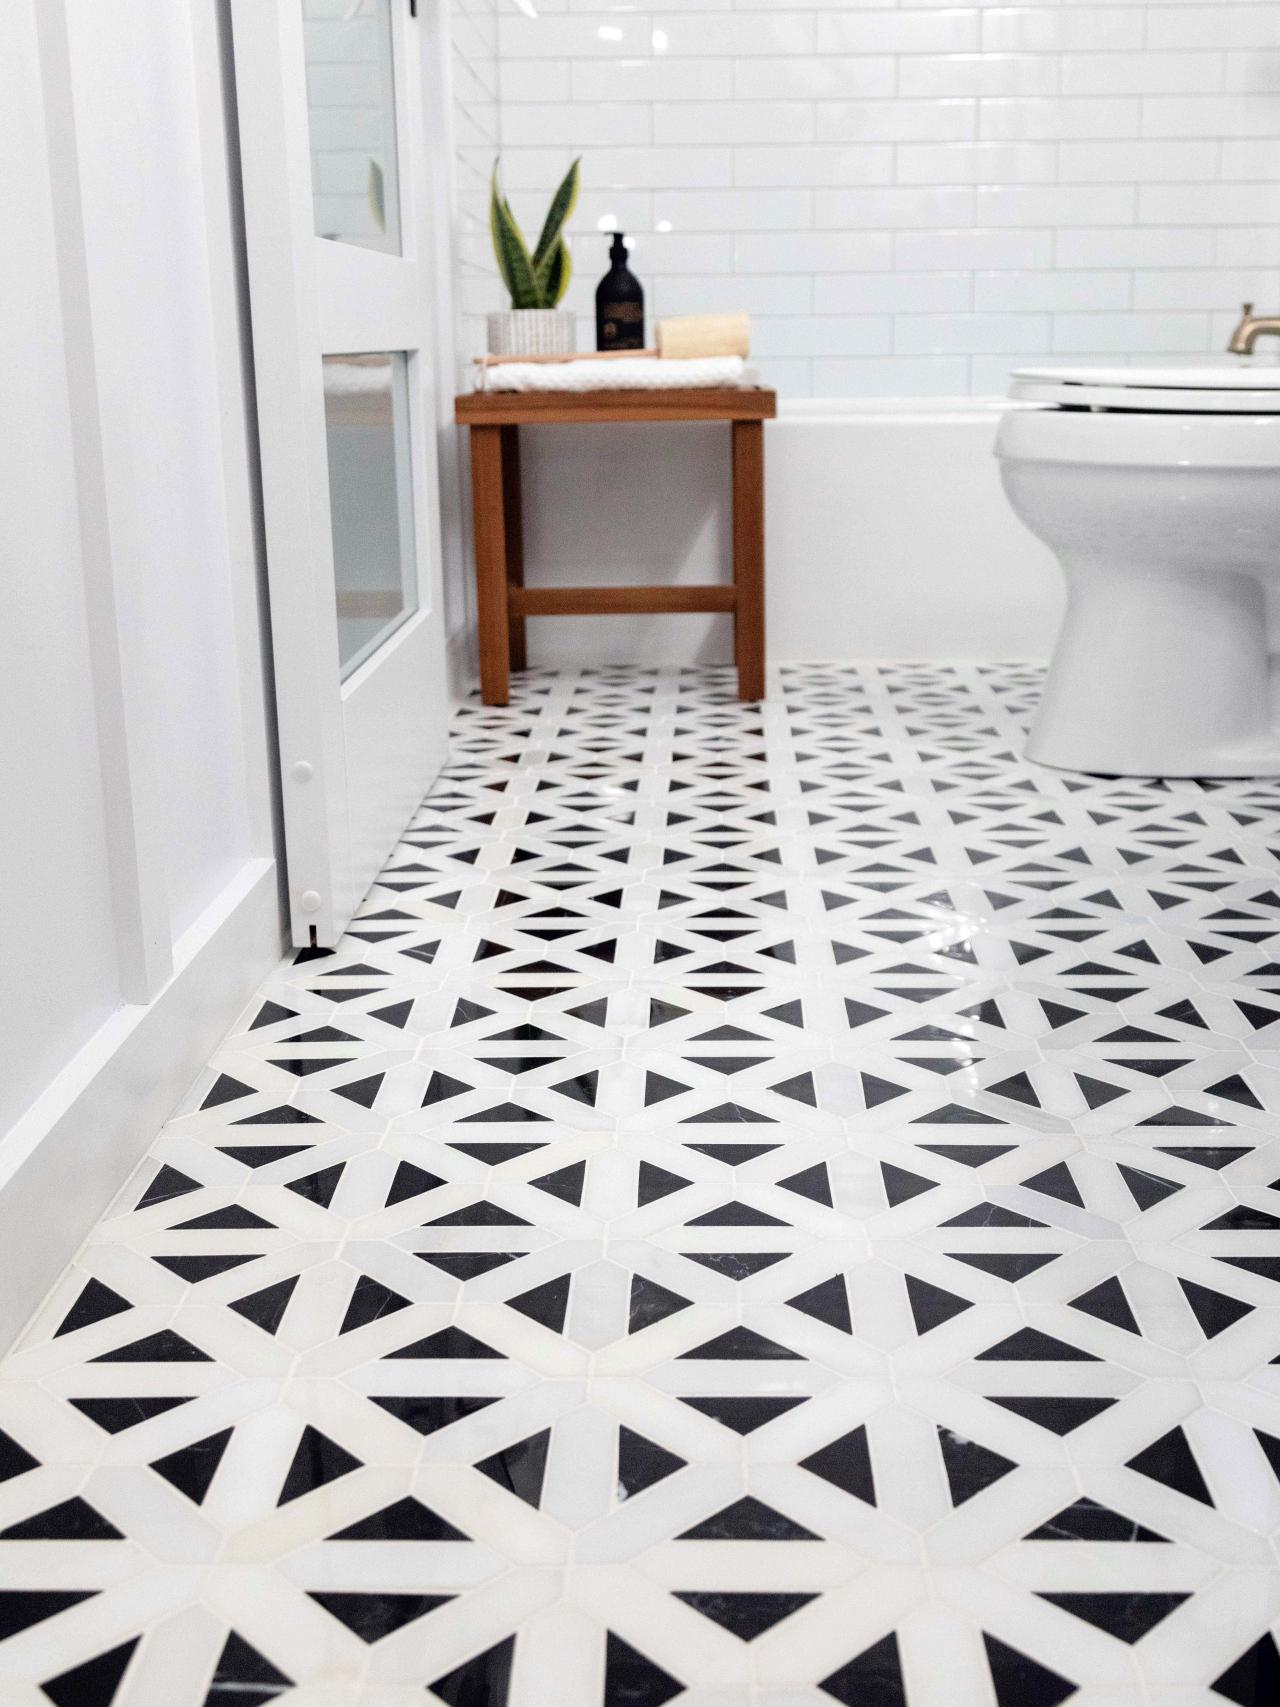 How To Lay A Tile Floor, Tiling Your Bathroom Floor